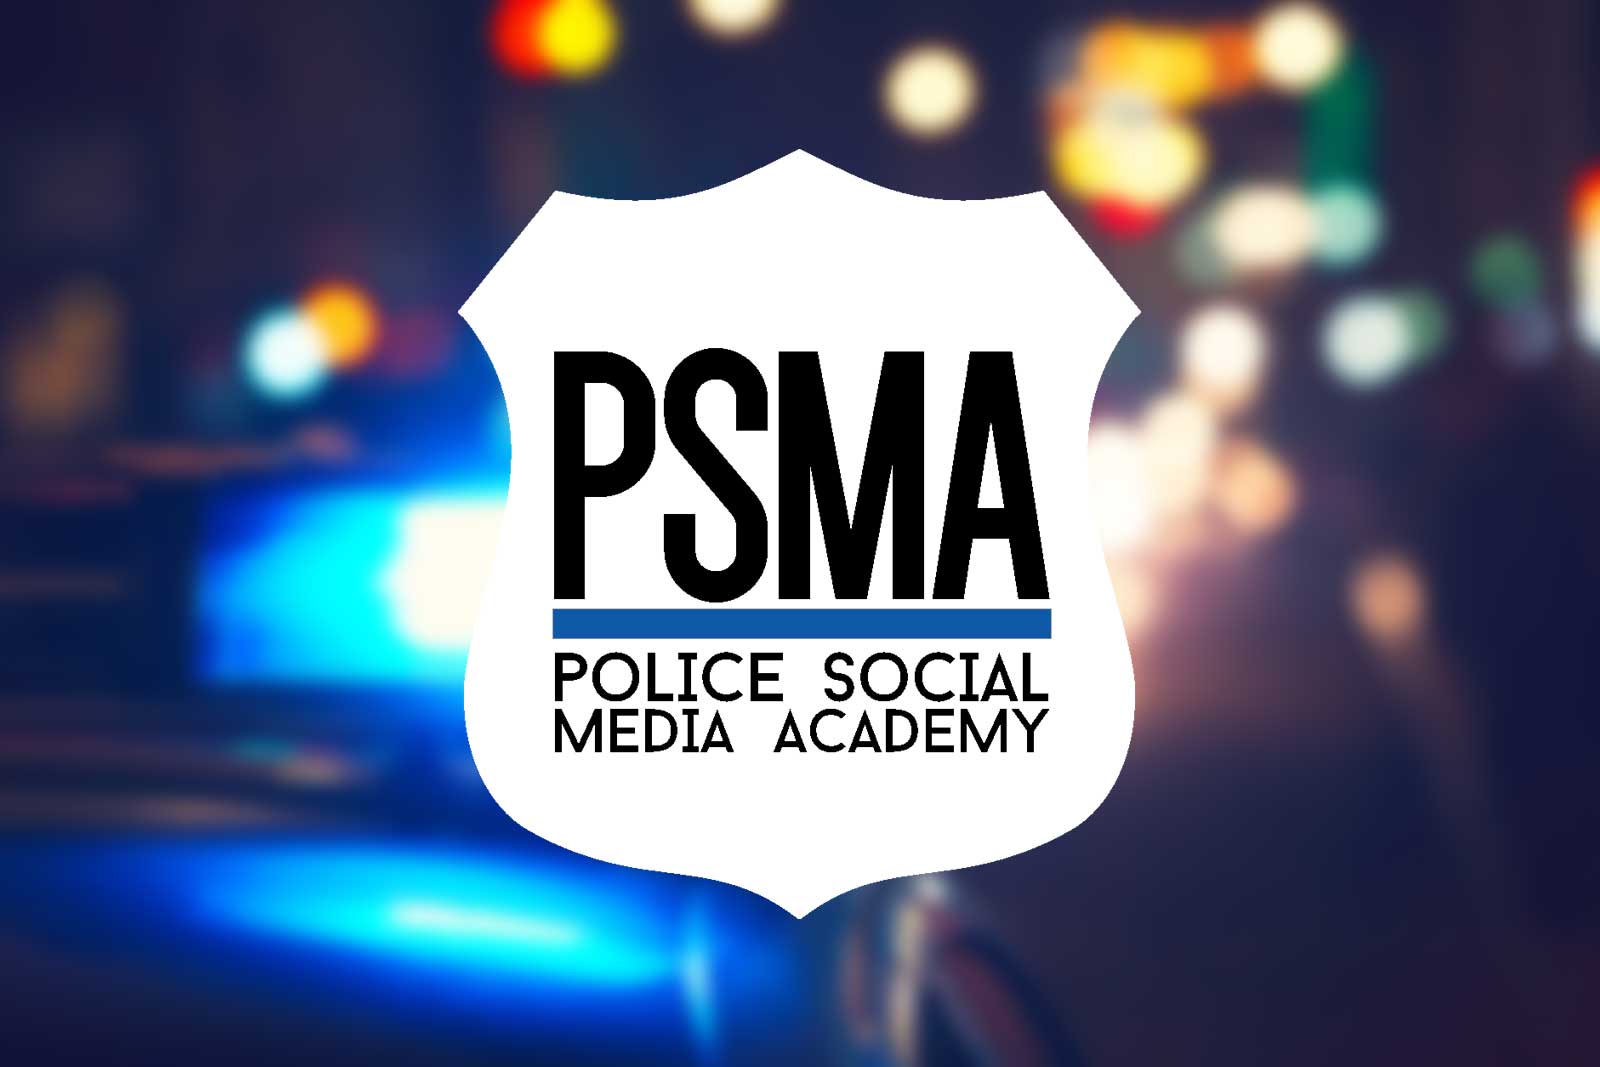 Police Social Media Academy